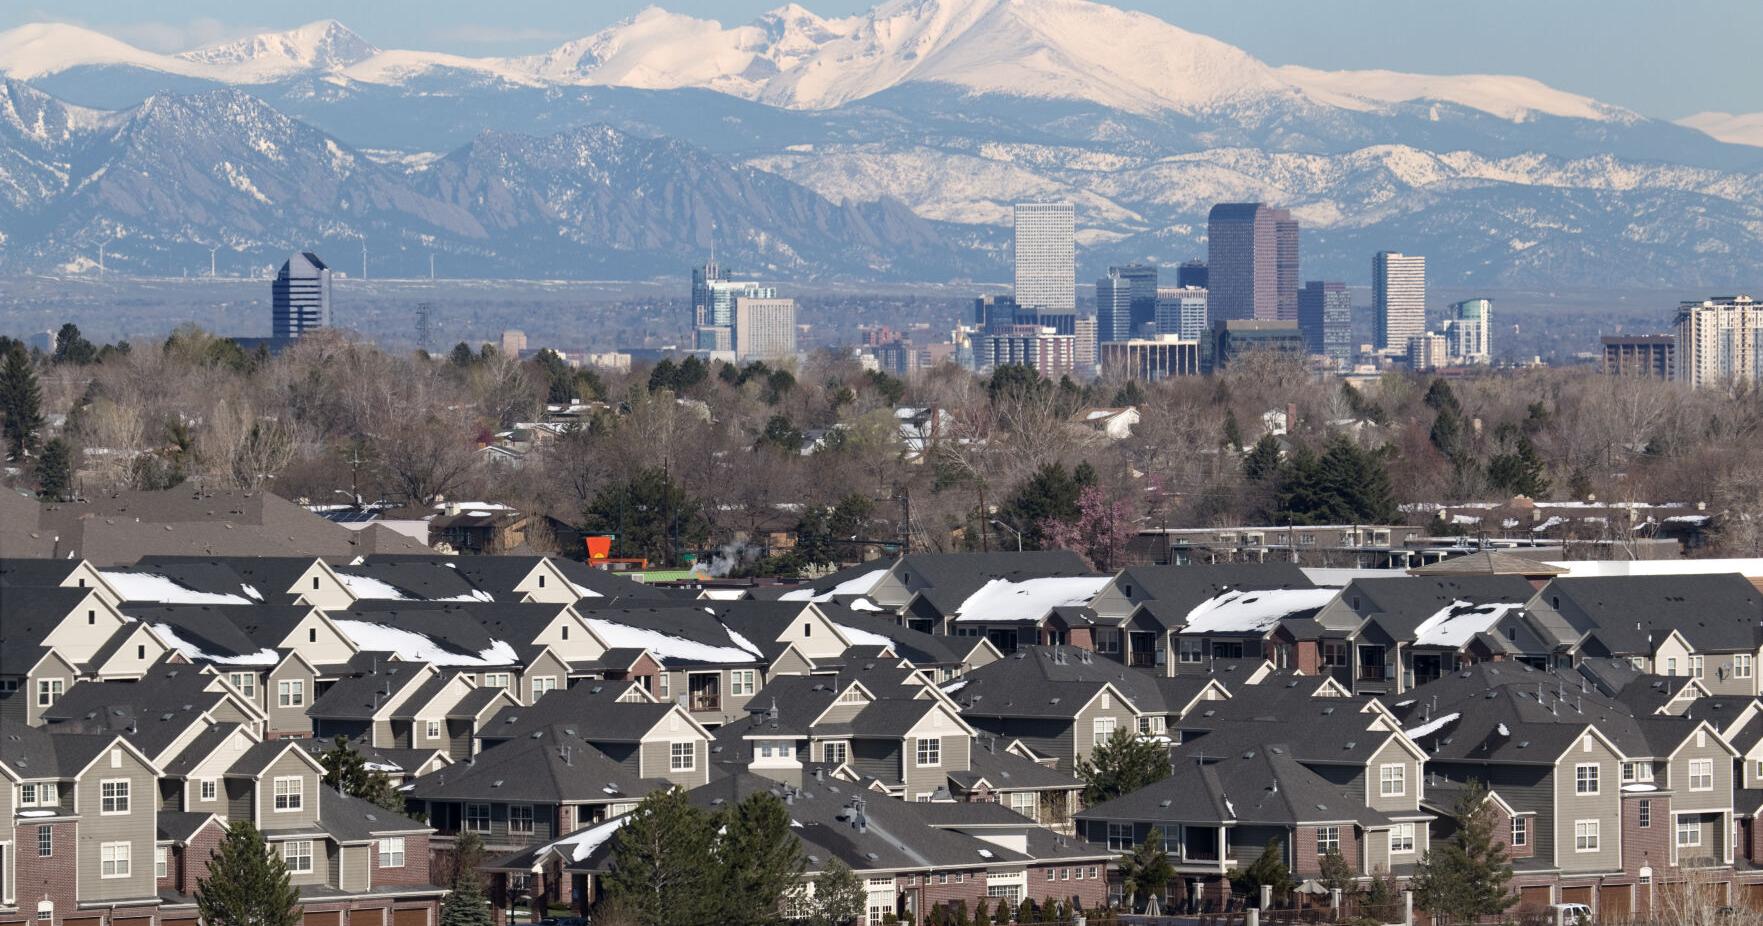 Colorado lawmakers begin work on 'construction defects' in efforts to jumpstart condo development